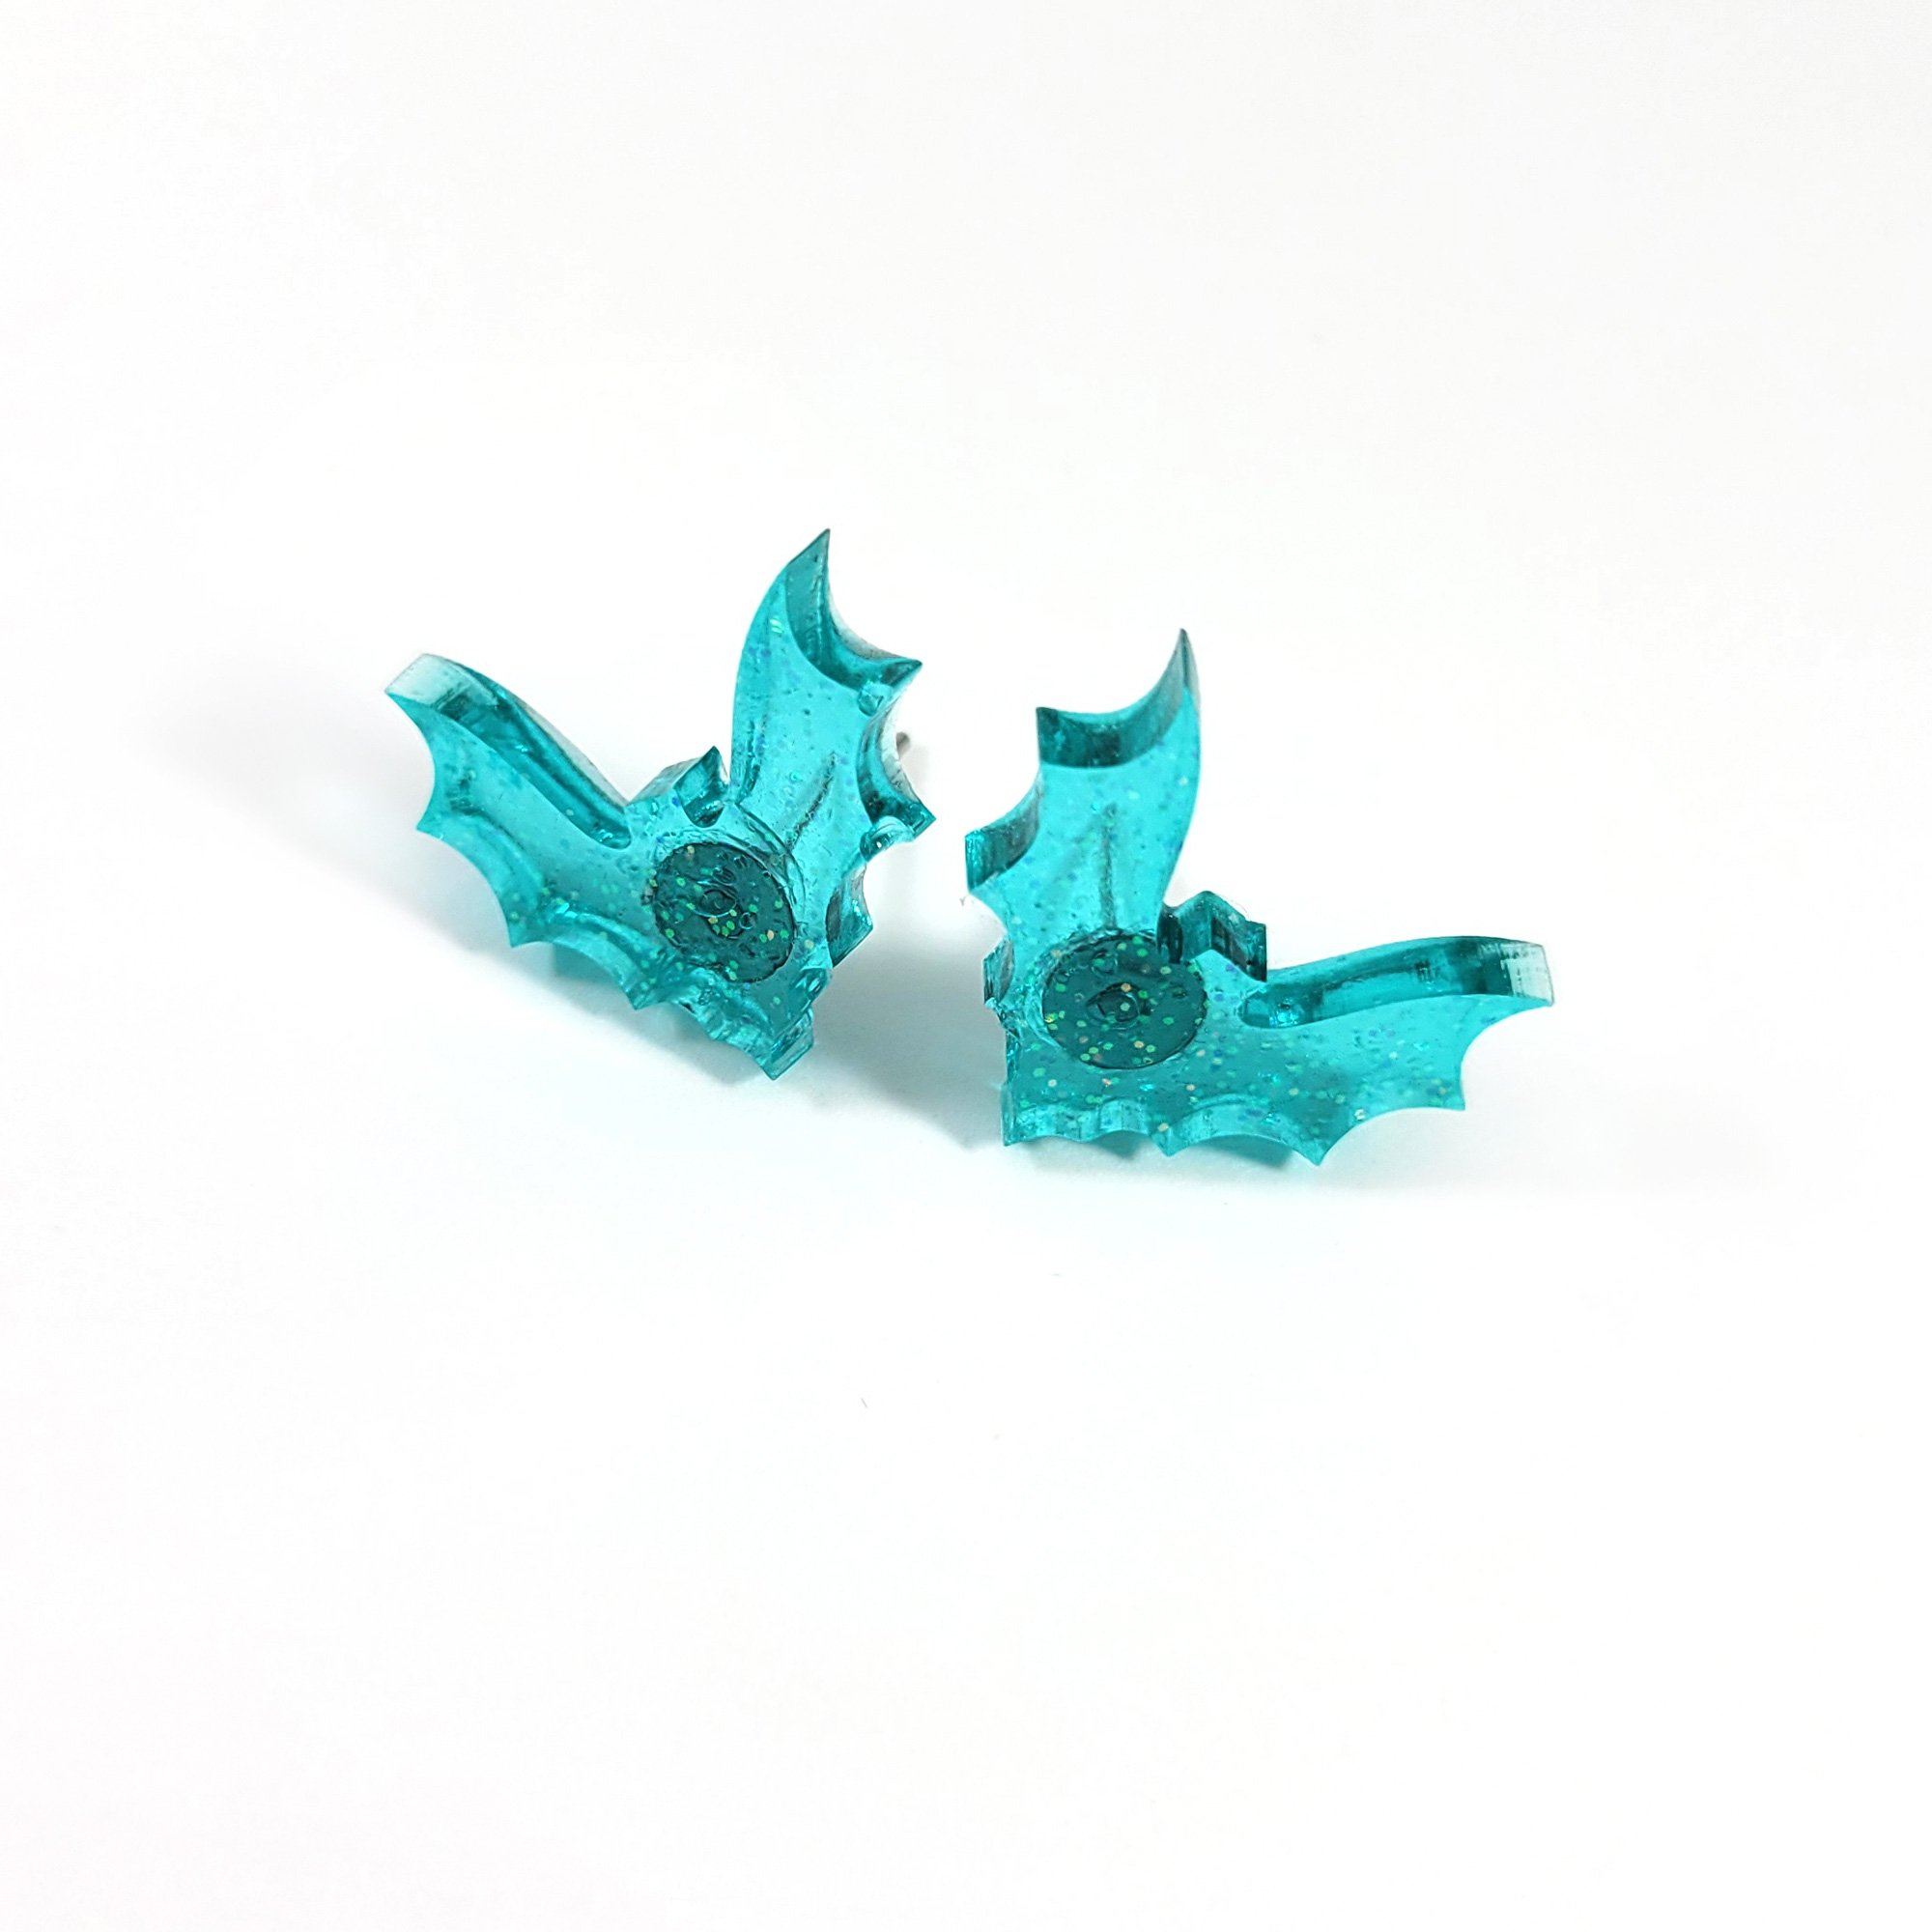 Flying Bat Stud Earrings by Wilde Designs